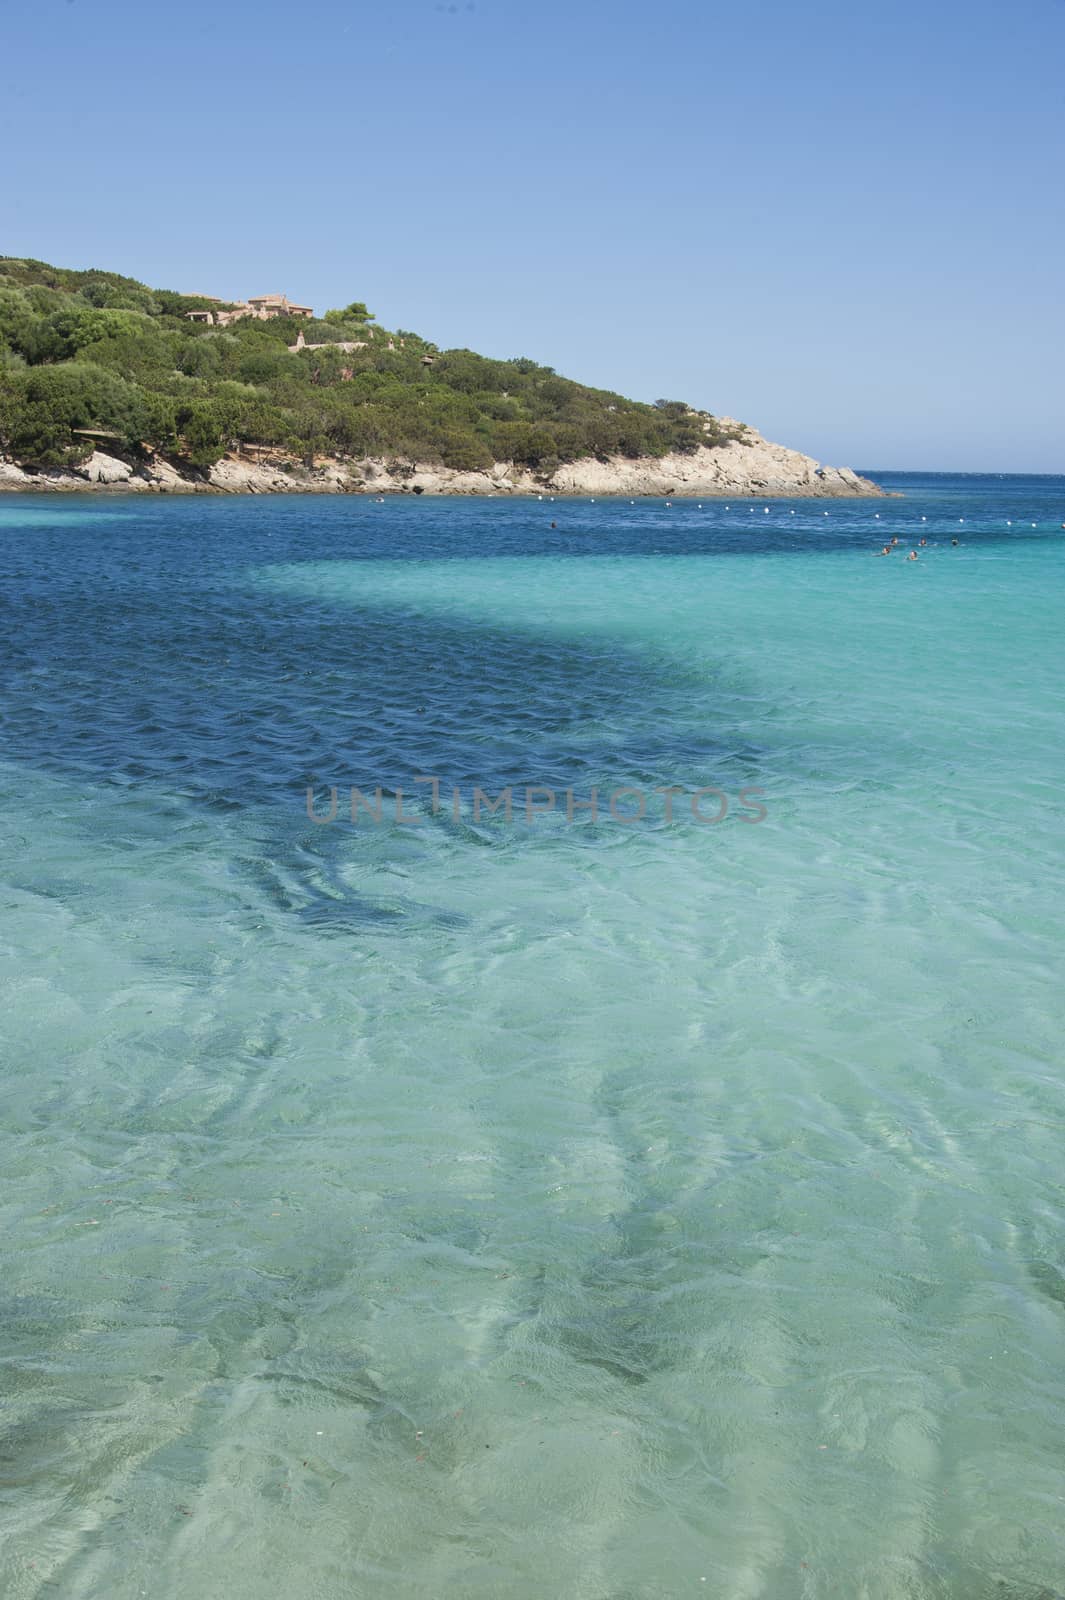 The wonderful colors of the sea in cala granu, a bay near Porto Cervo in Costa Smeralda